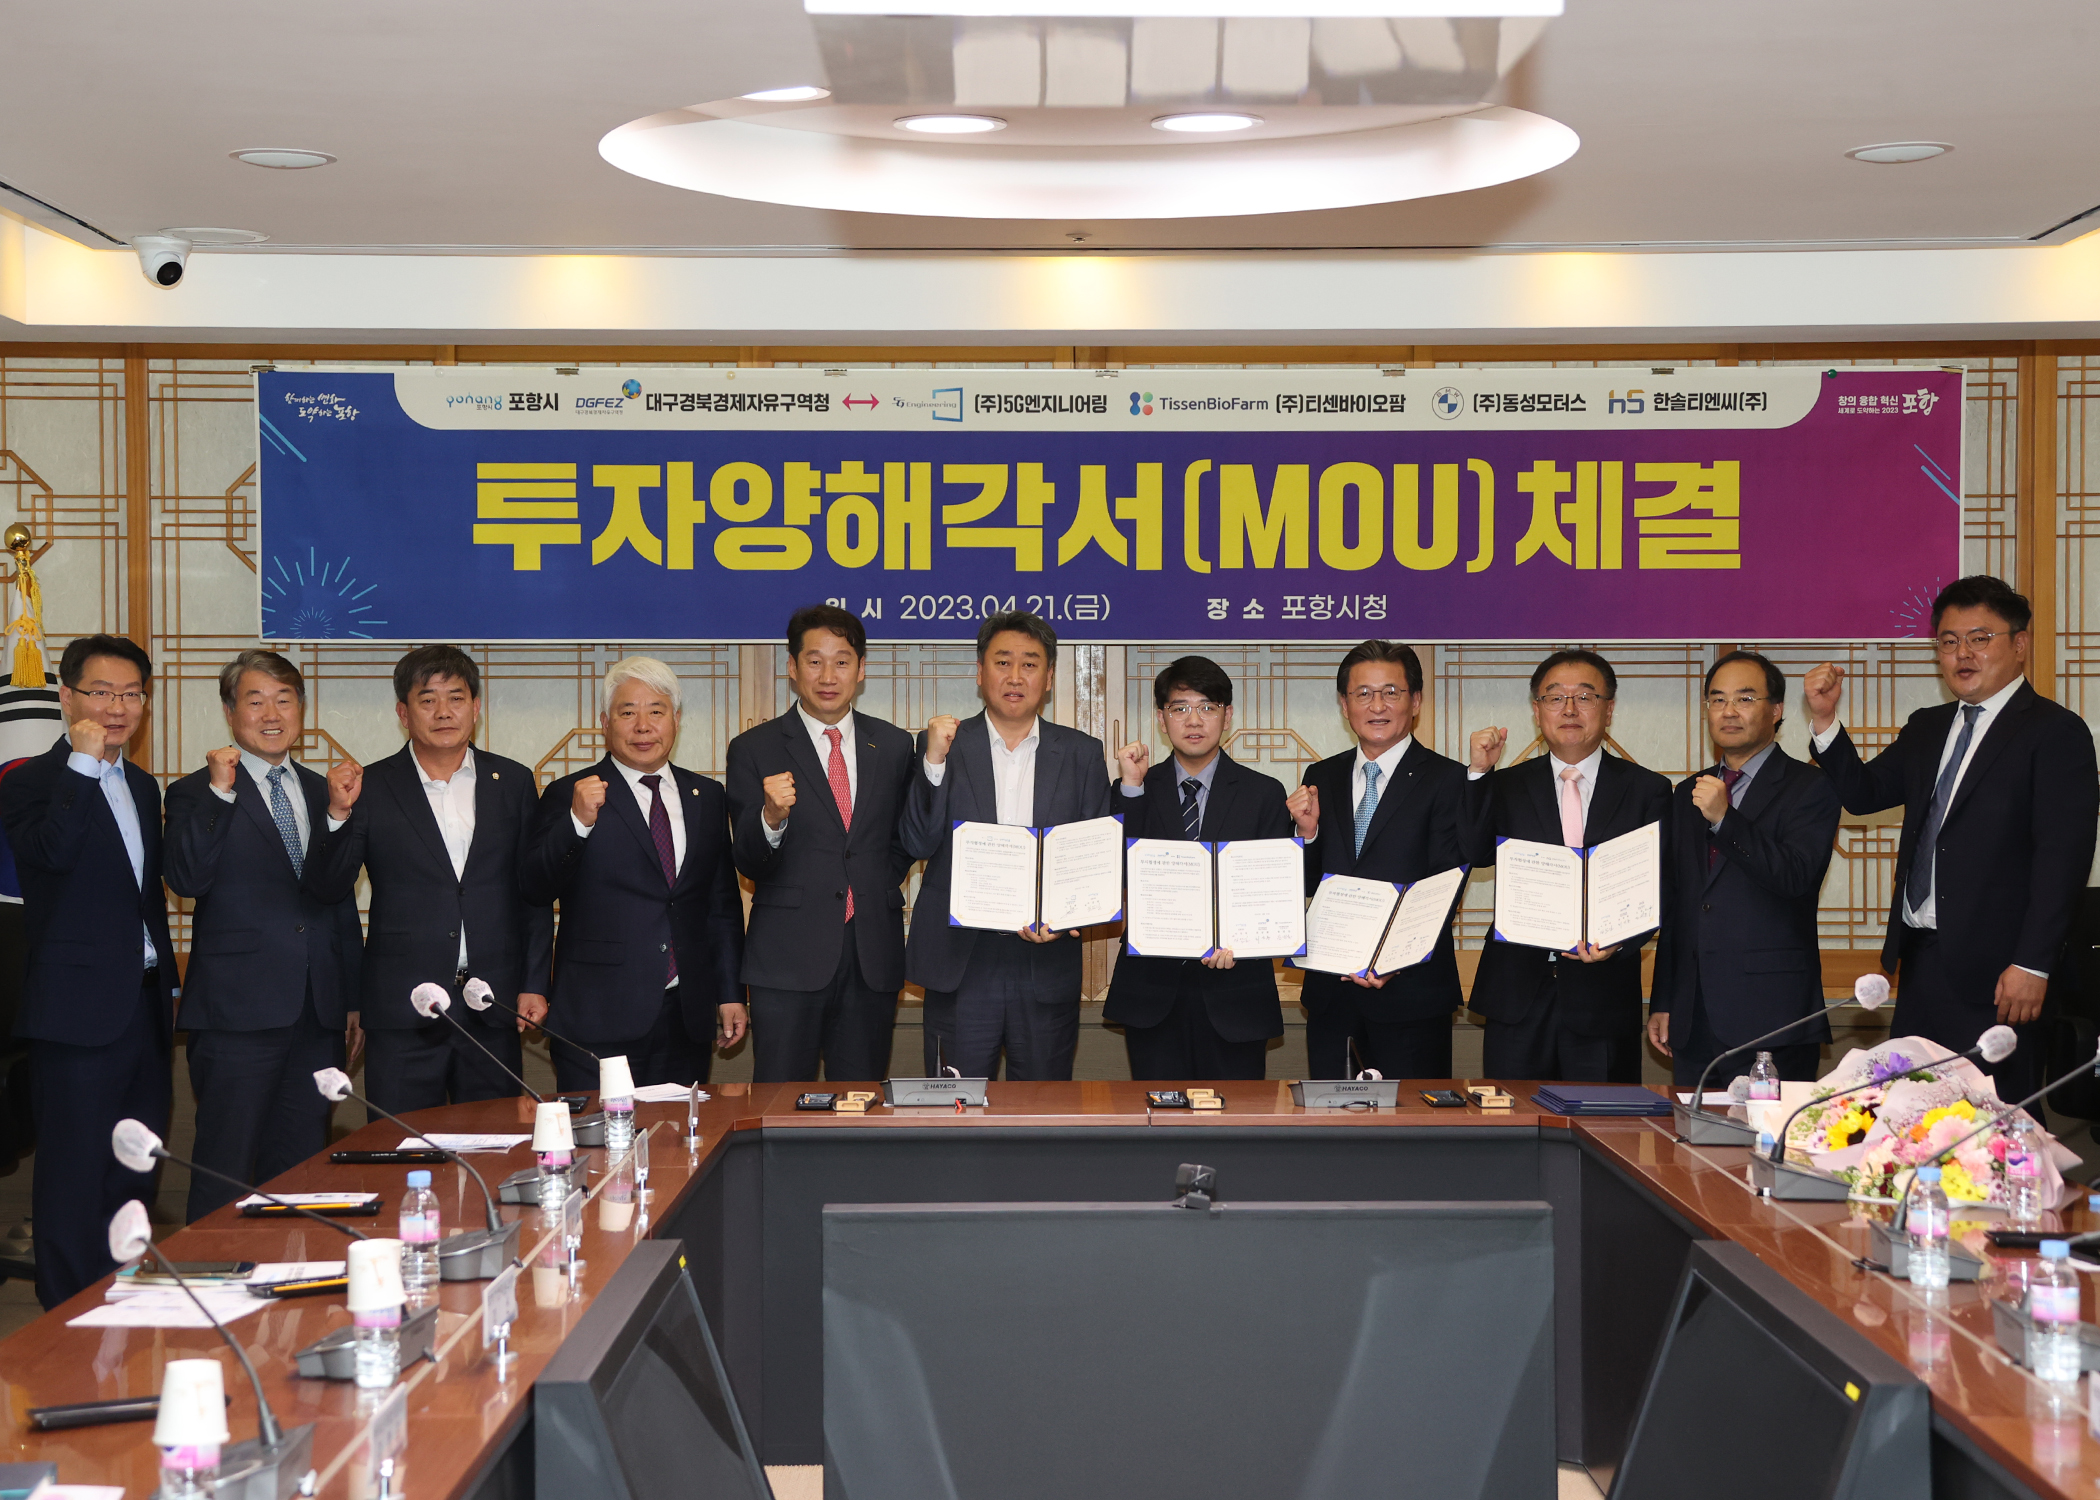 3社と浦項融合技術産業地区の投資協約(MOU)締結